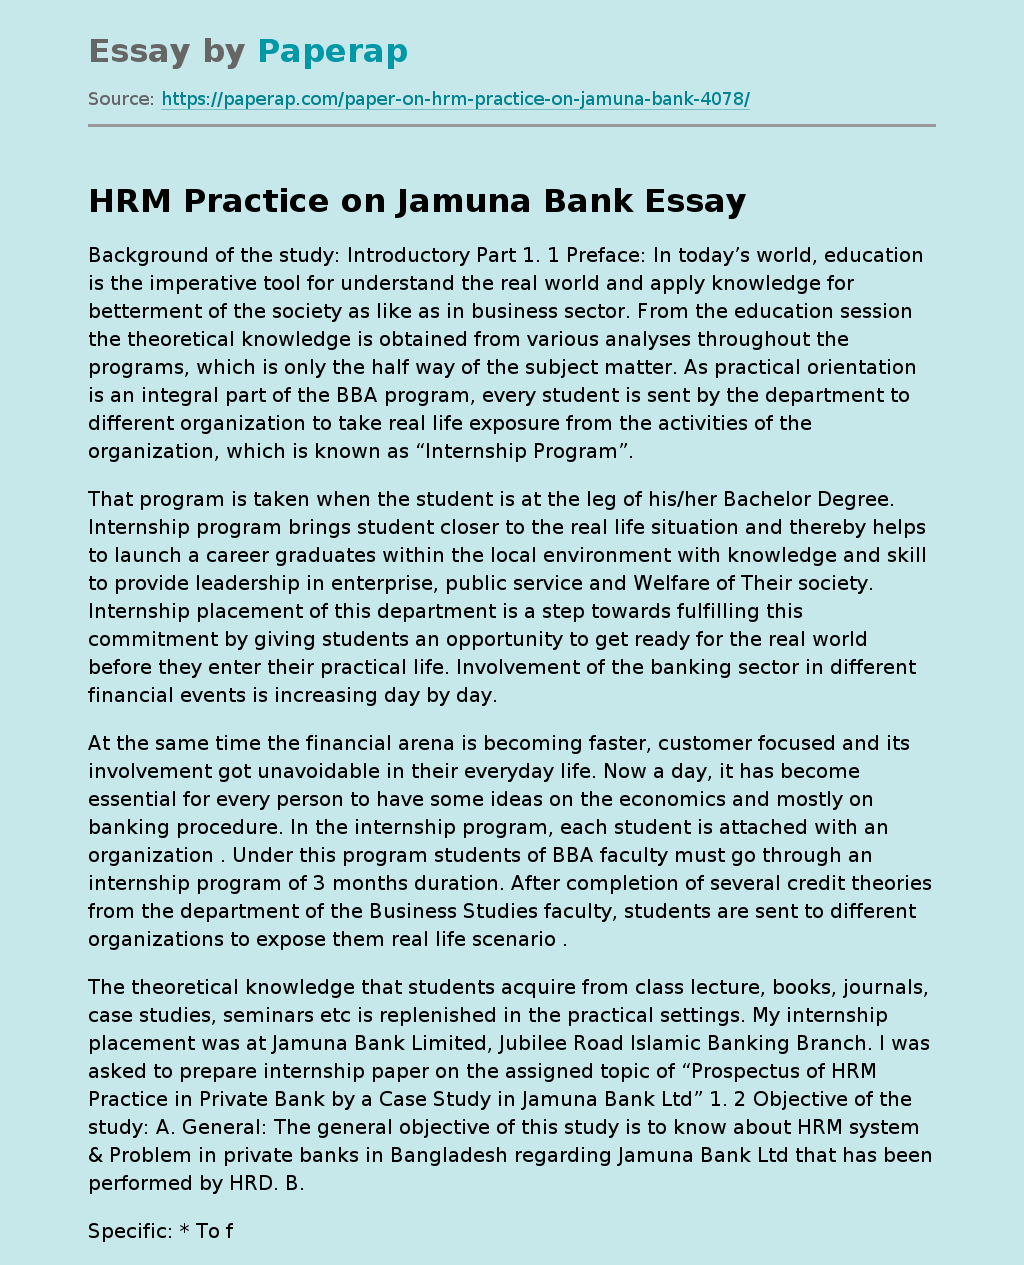 HRM Practice on Jamuna Bank